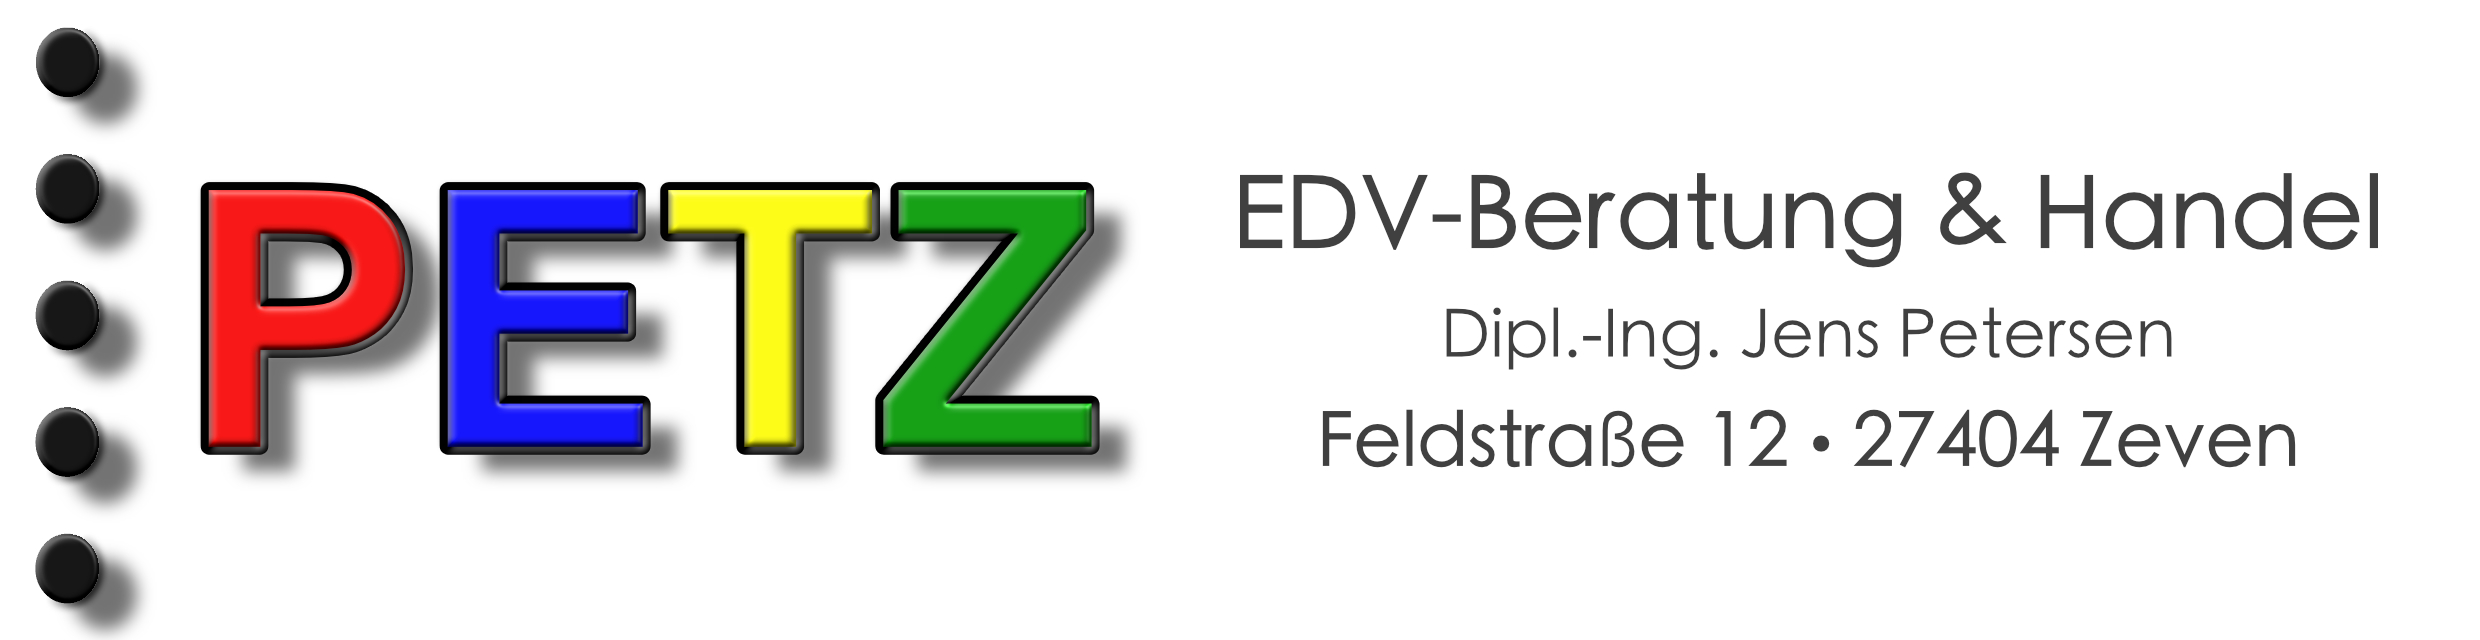 PETZ EDV-Beratung & Handel